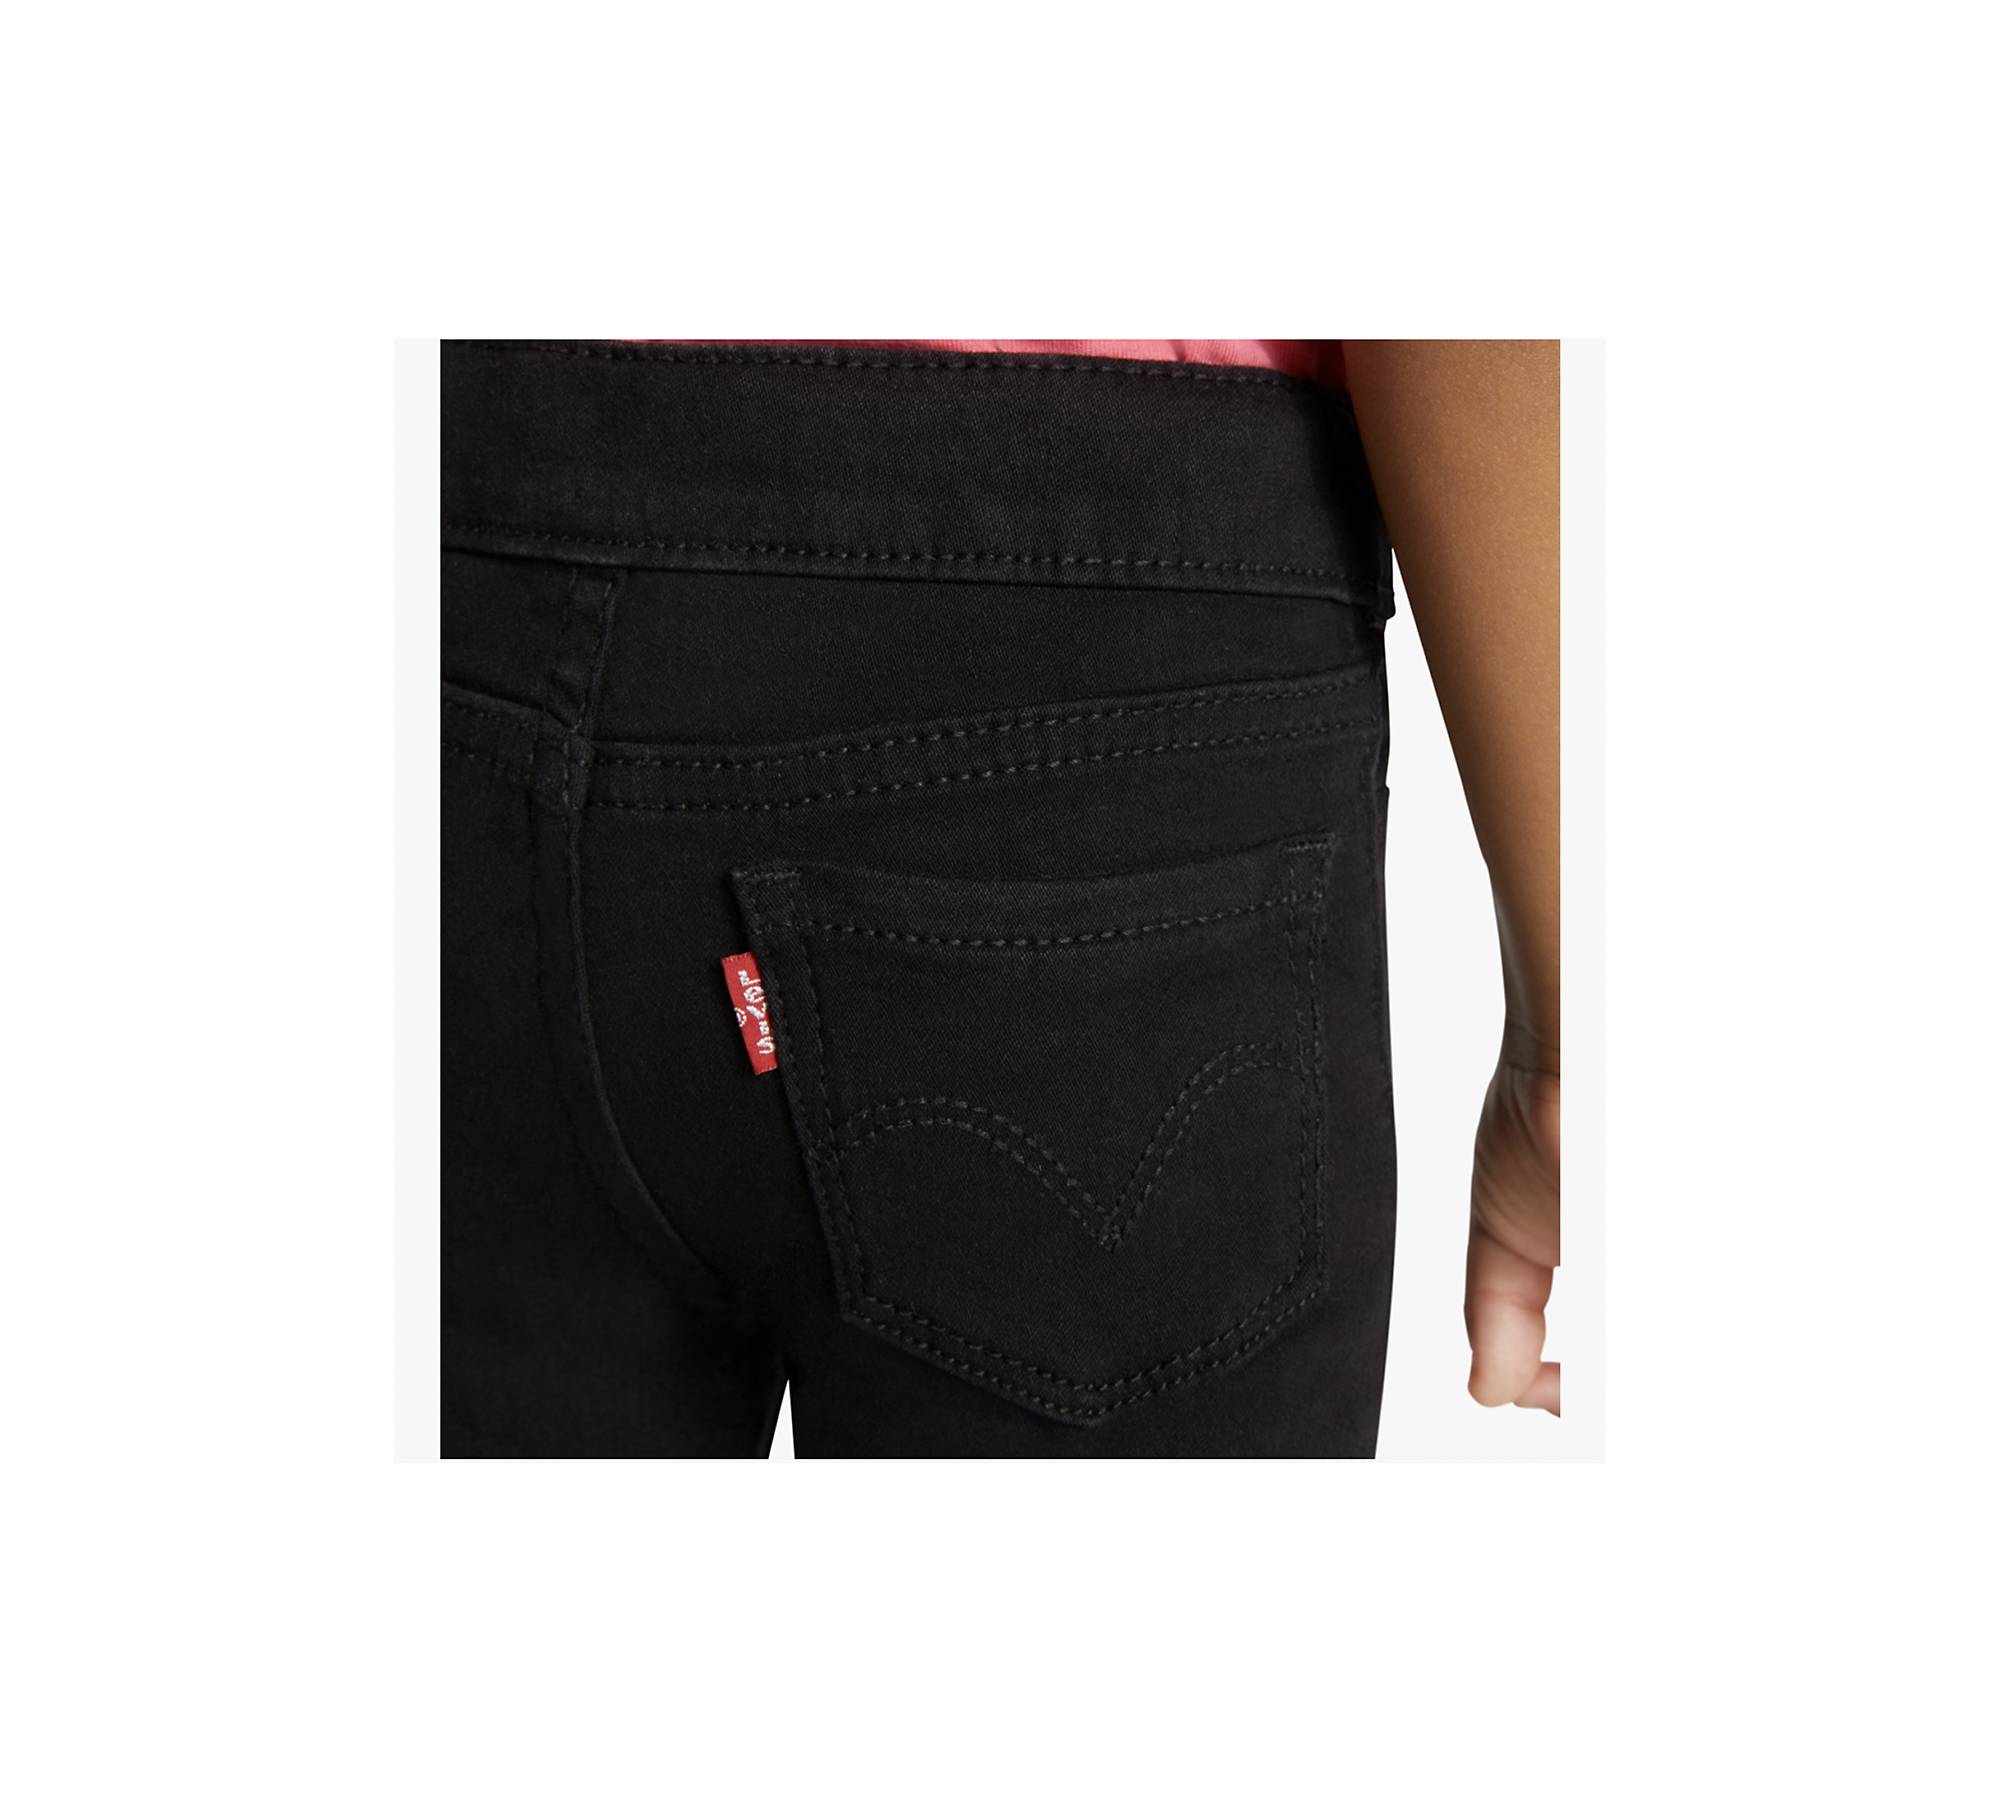 Childrens Place Pants Girls 5T Stretch Pull On Black Jeggings Leggings  Pockets